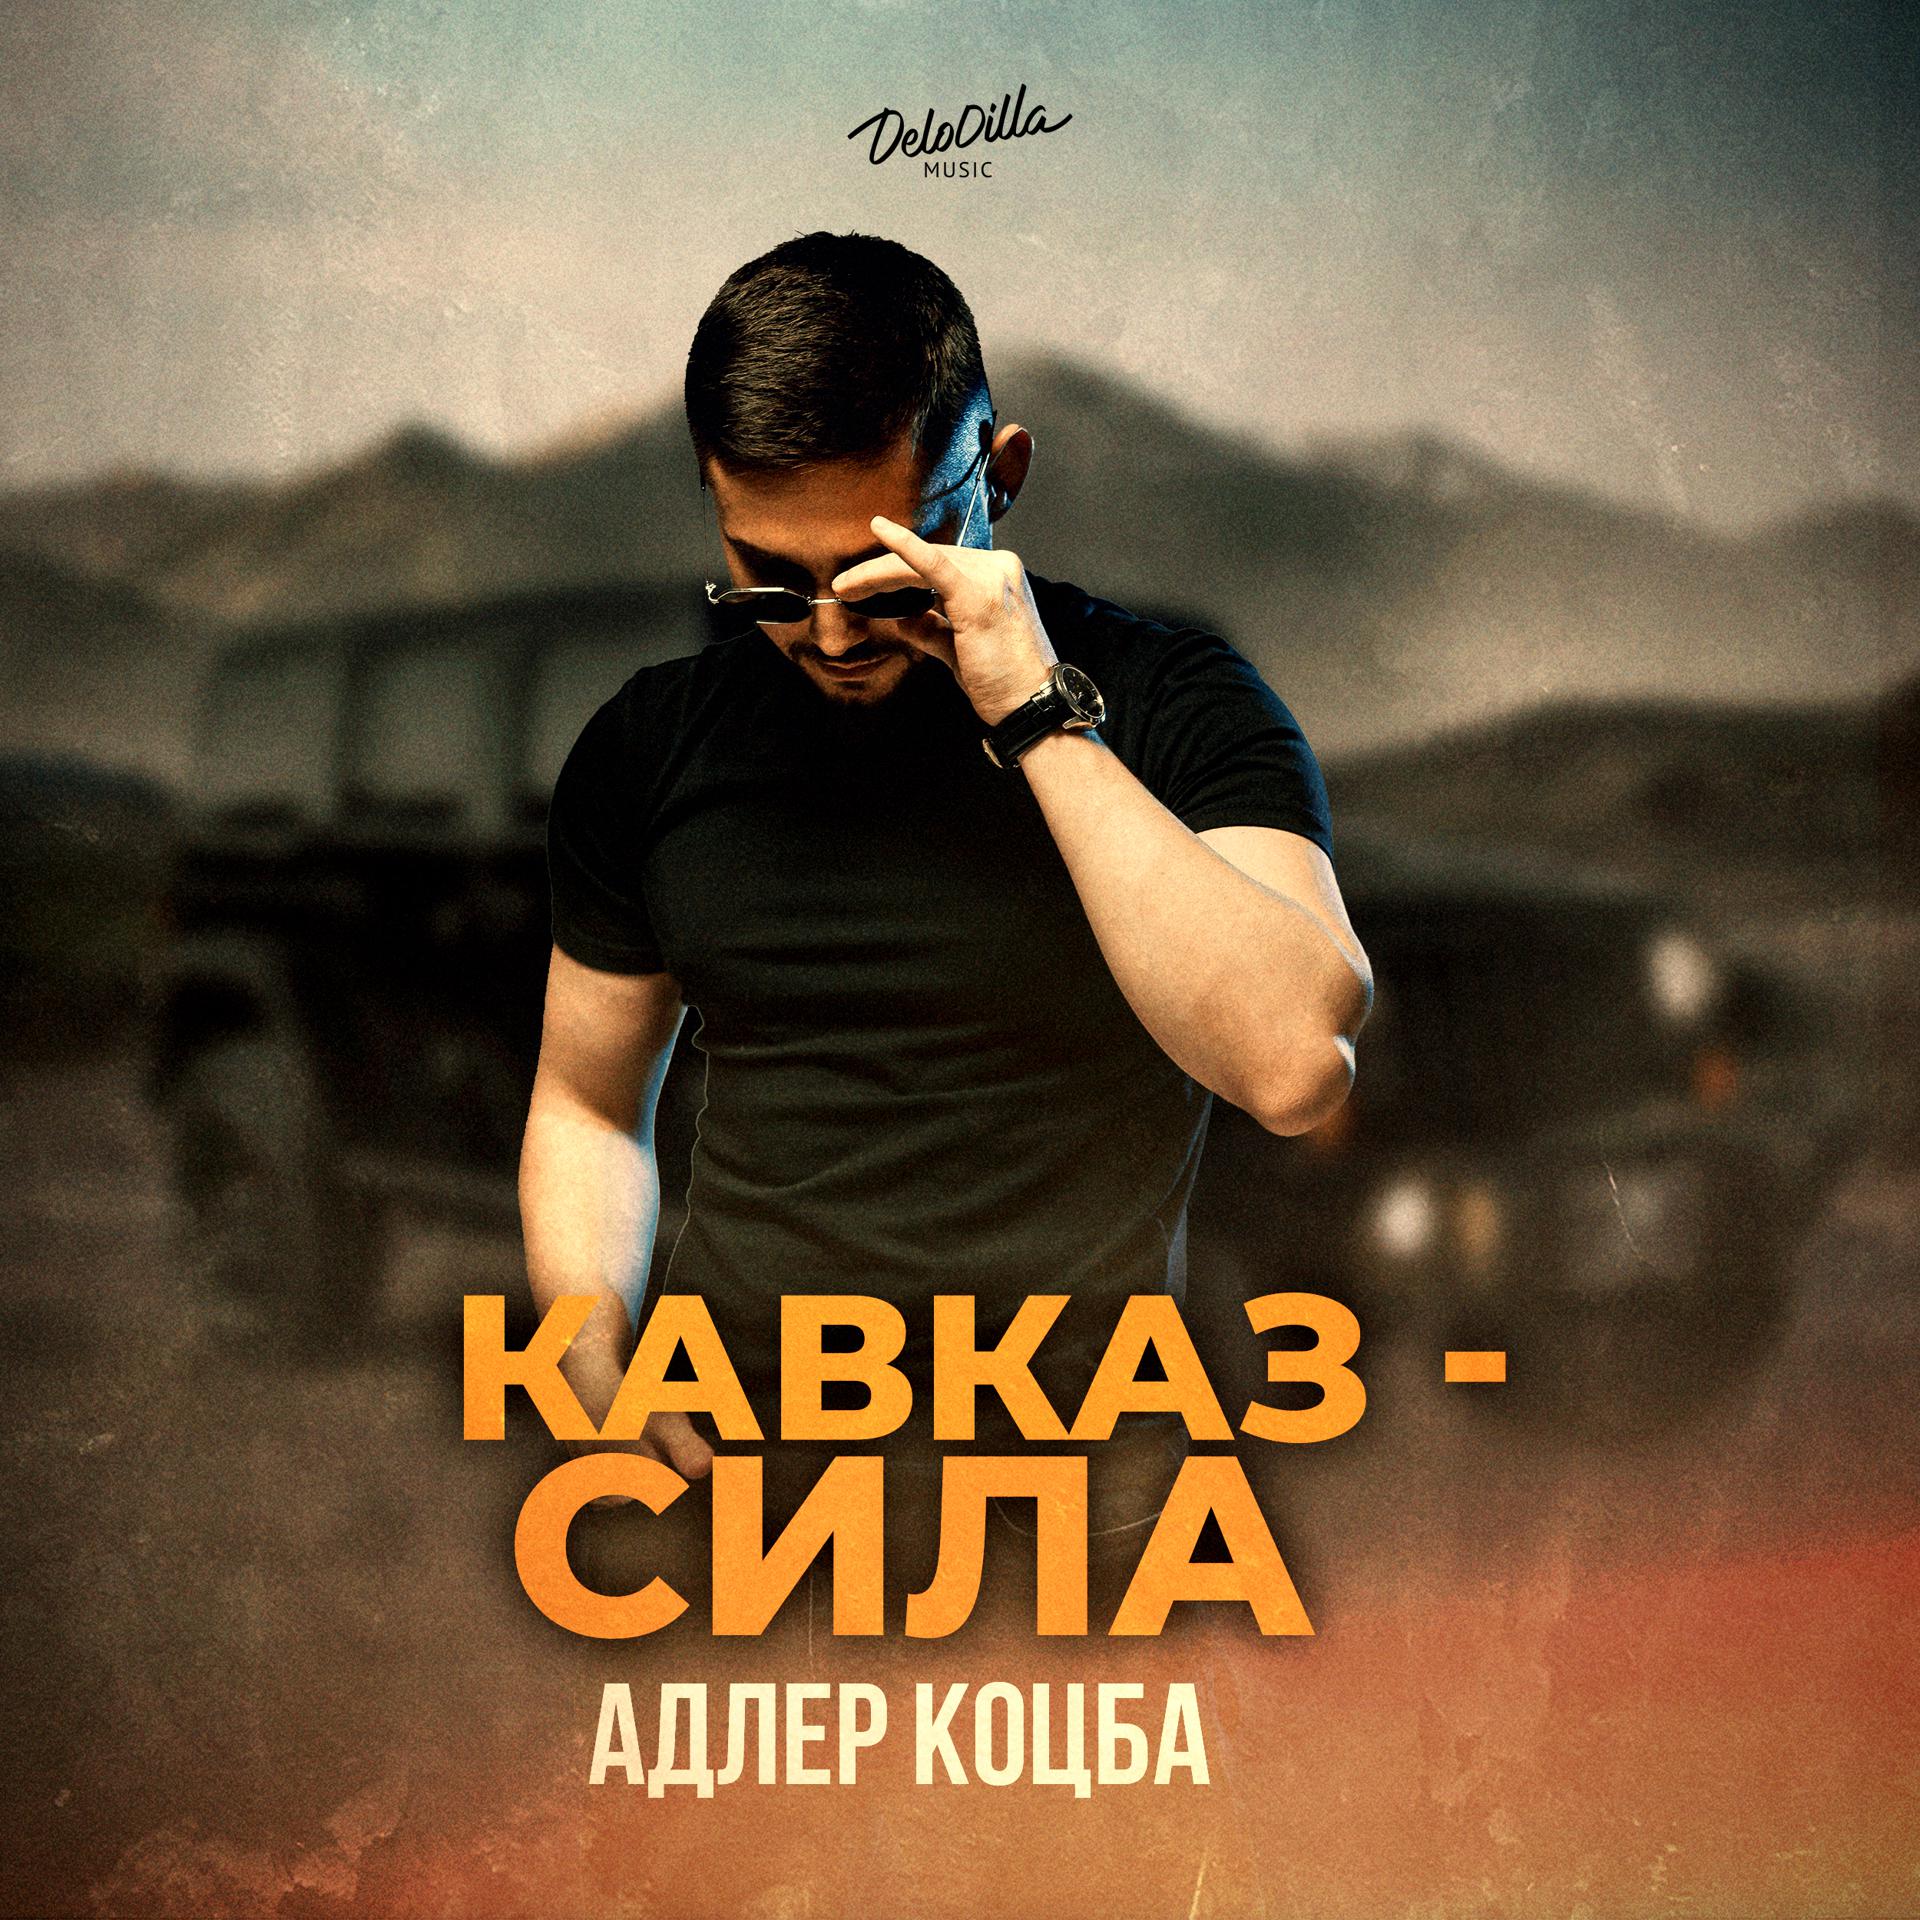 Постер к треку Адлер Коцба - Кавказ - сила